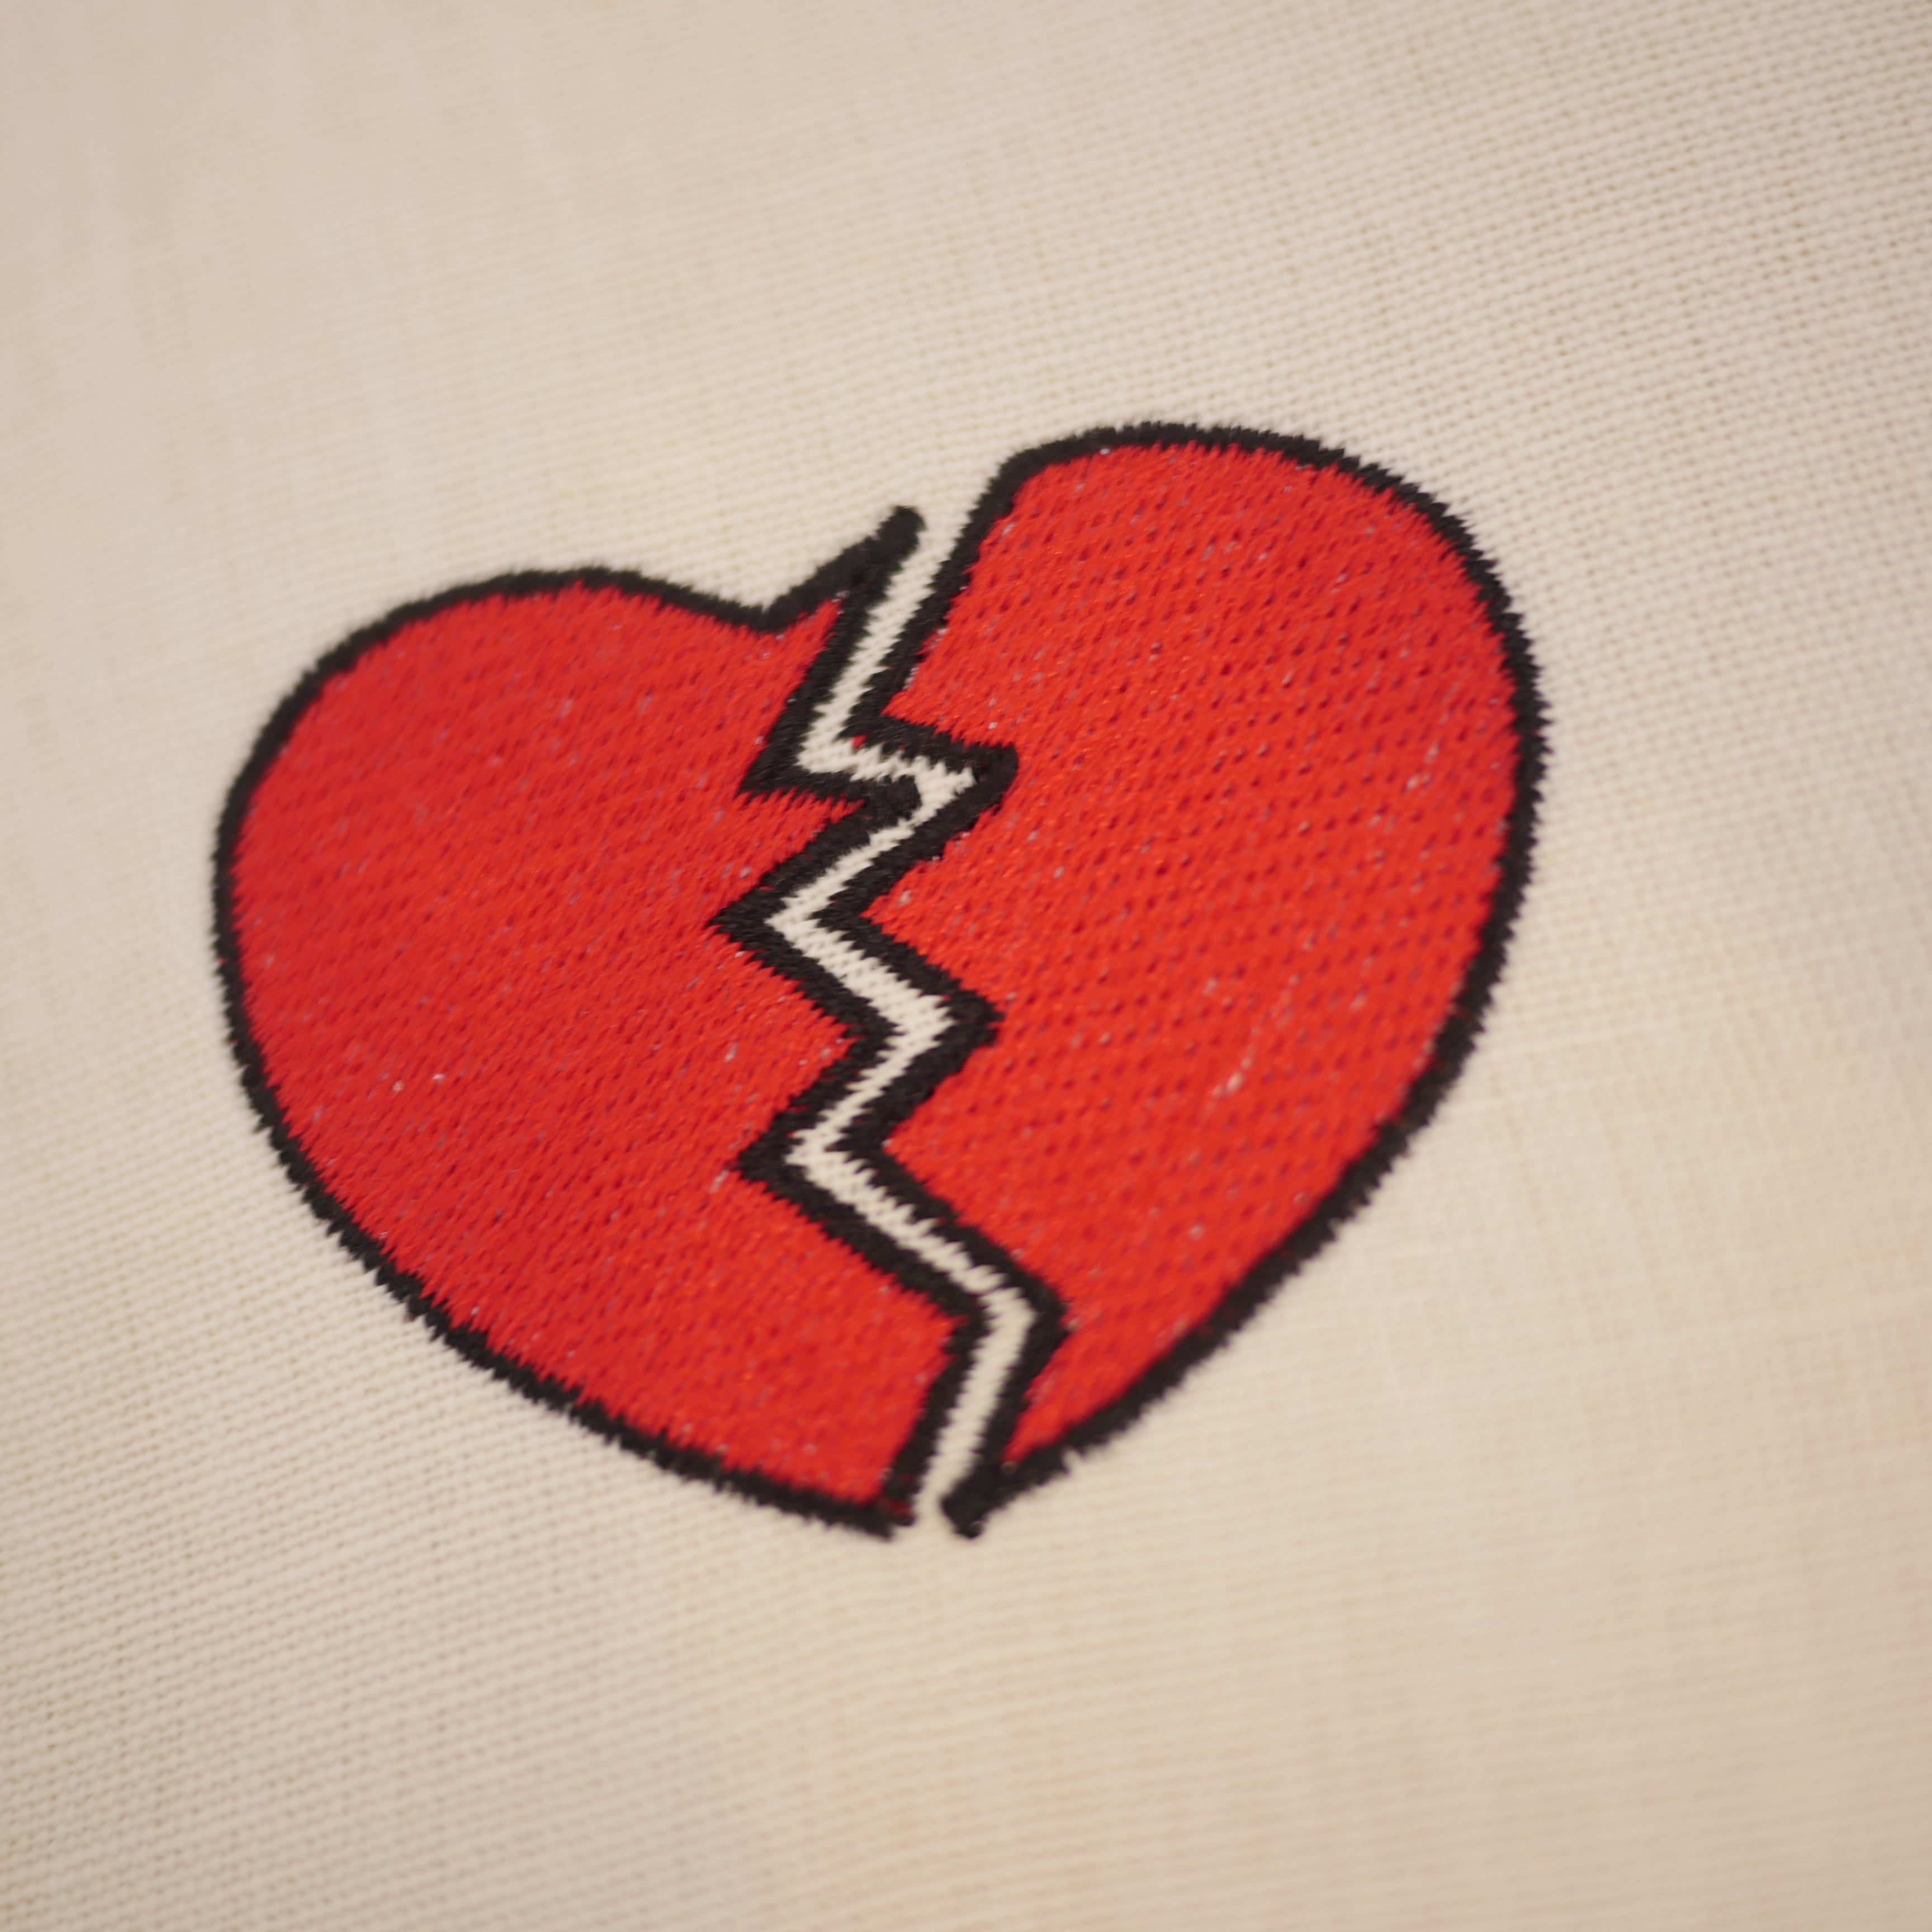 Broken Heart Embroidery Design